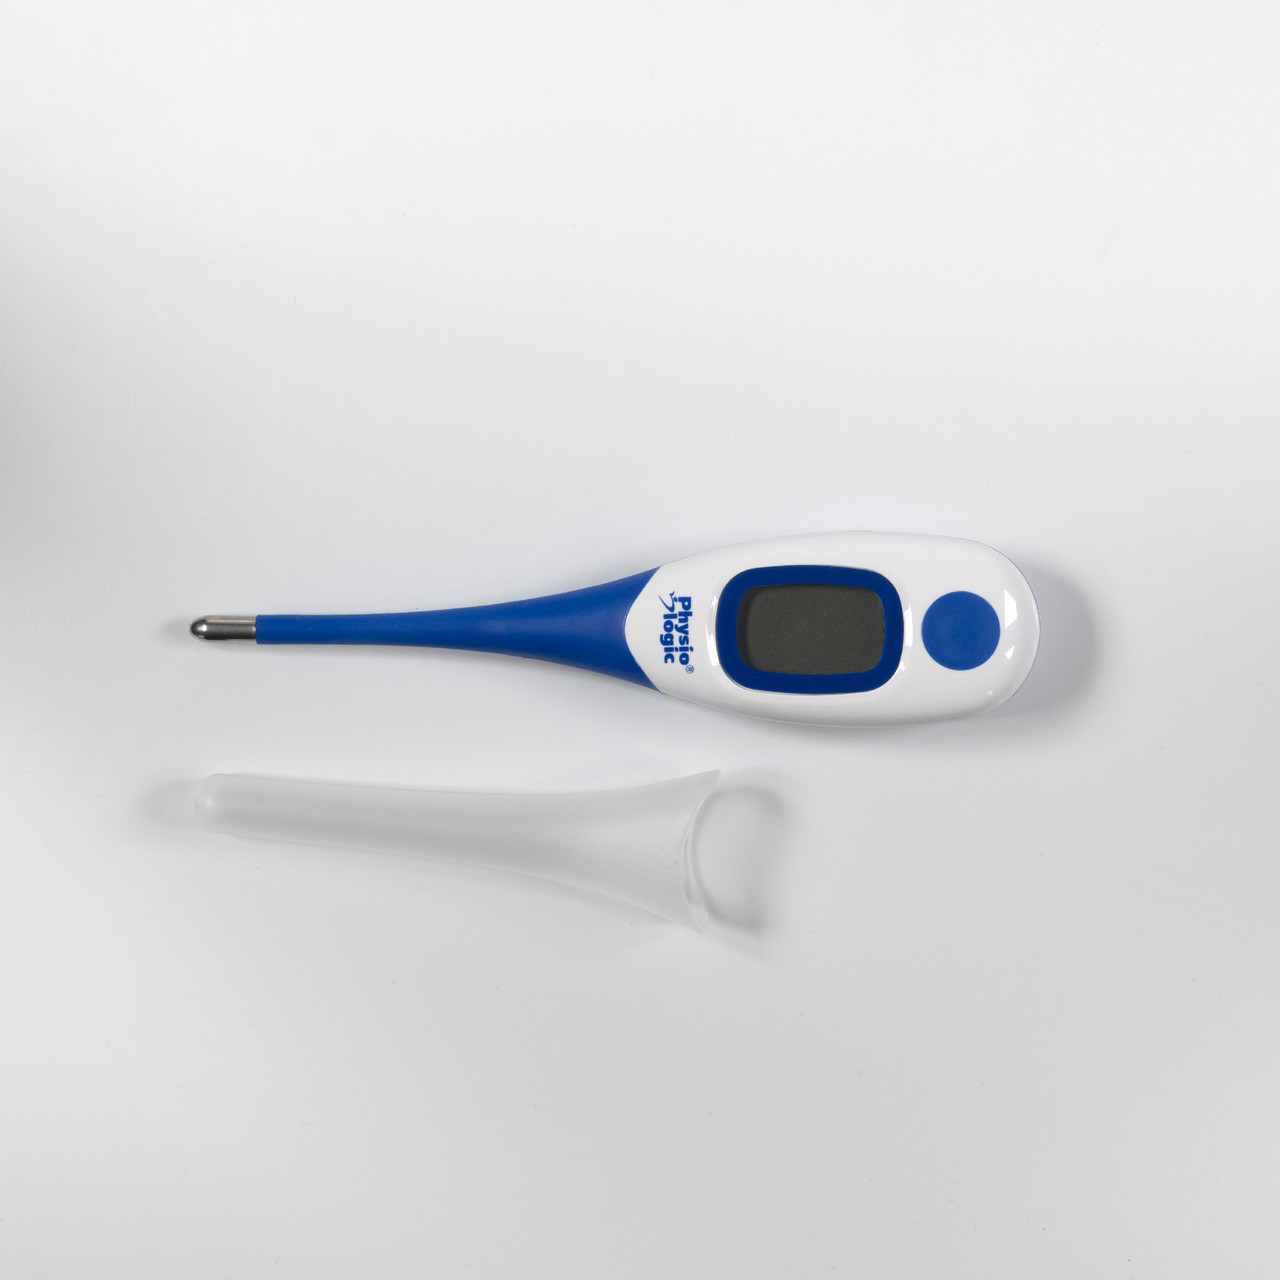 Thermomètre digital buccal Physiologic DiGiPro avec écran ACL.